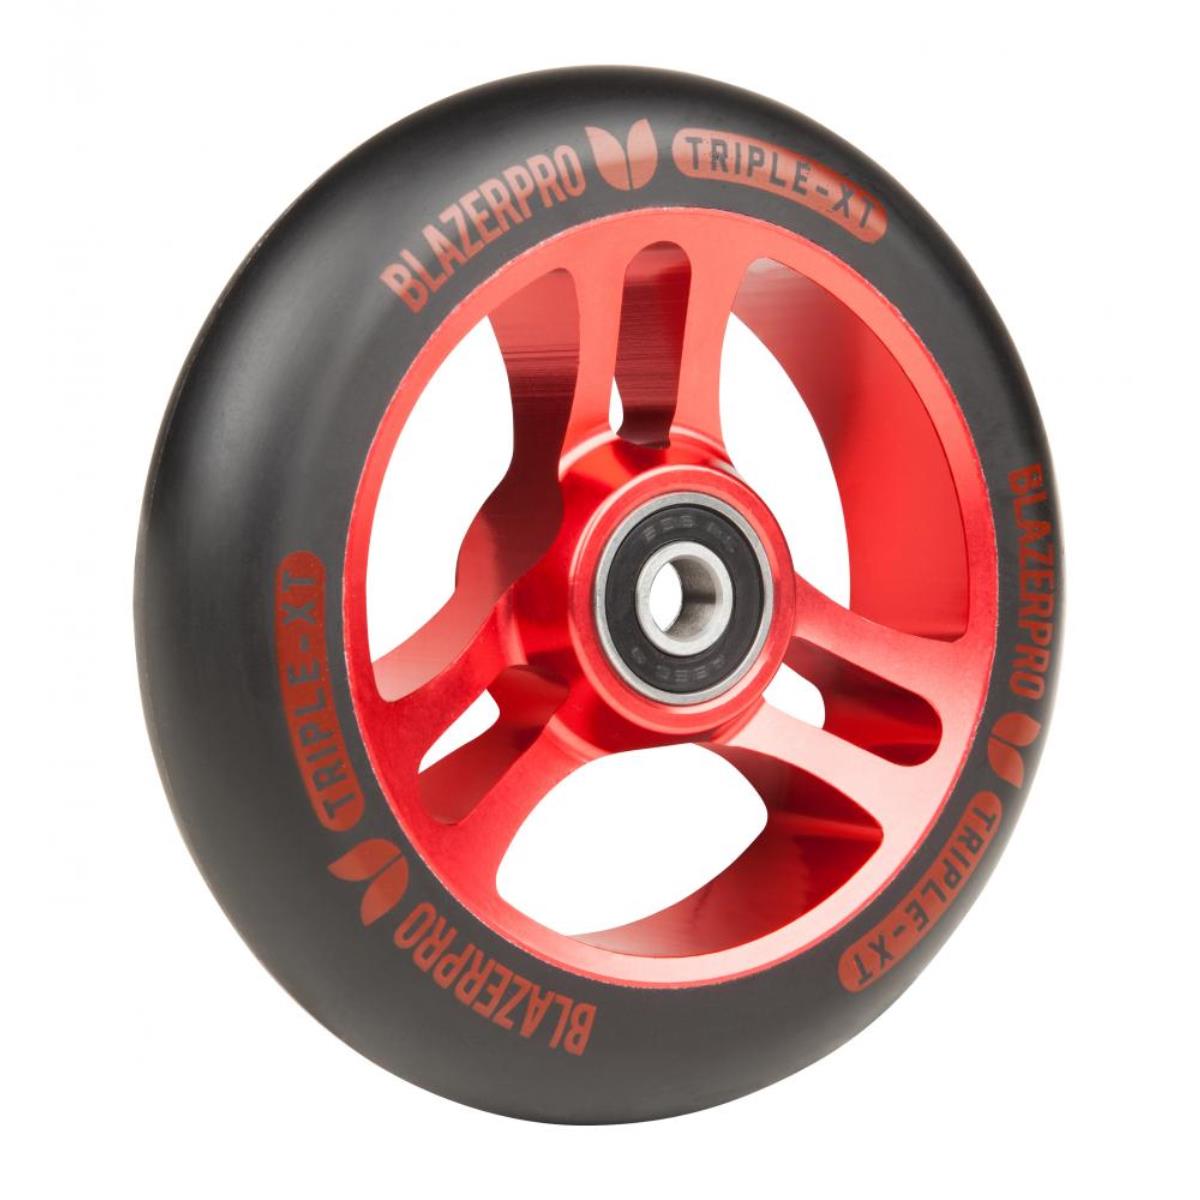 Black Gum Blazer Pro Rebellion 110mm Alloy Core Scooter Wheel